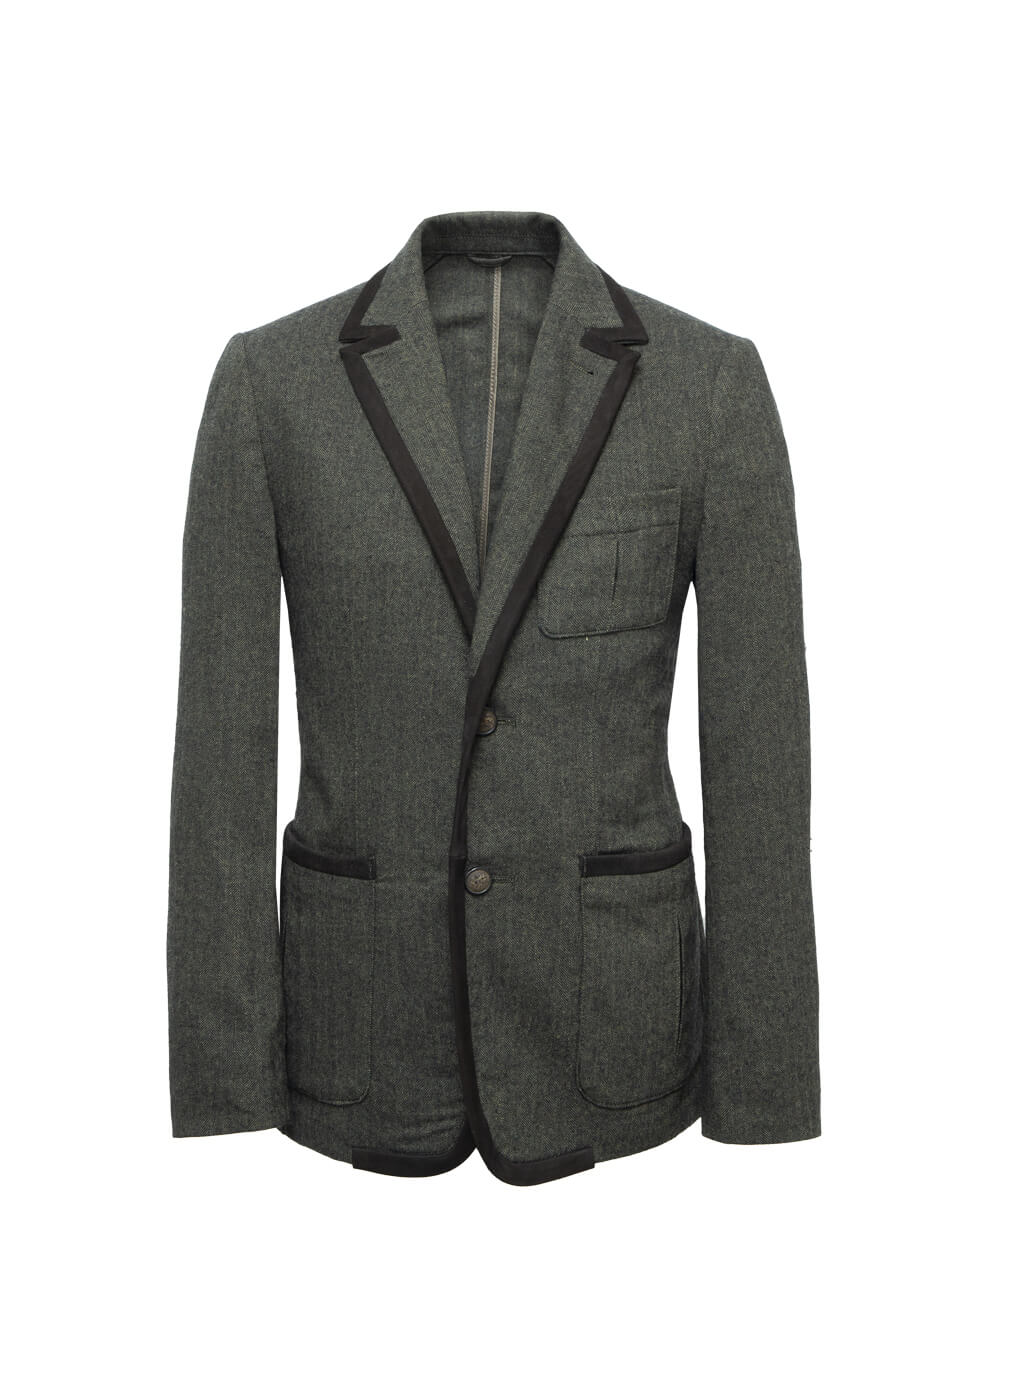 Fabric Jacket “Ryedale”, urban green